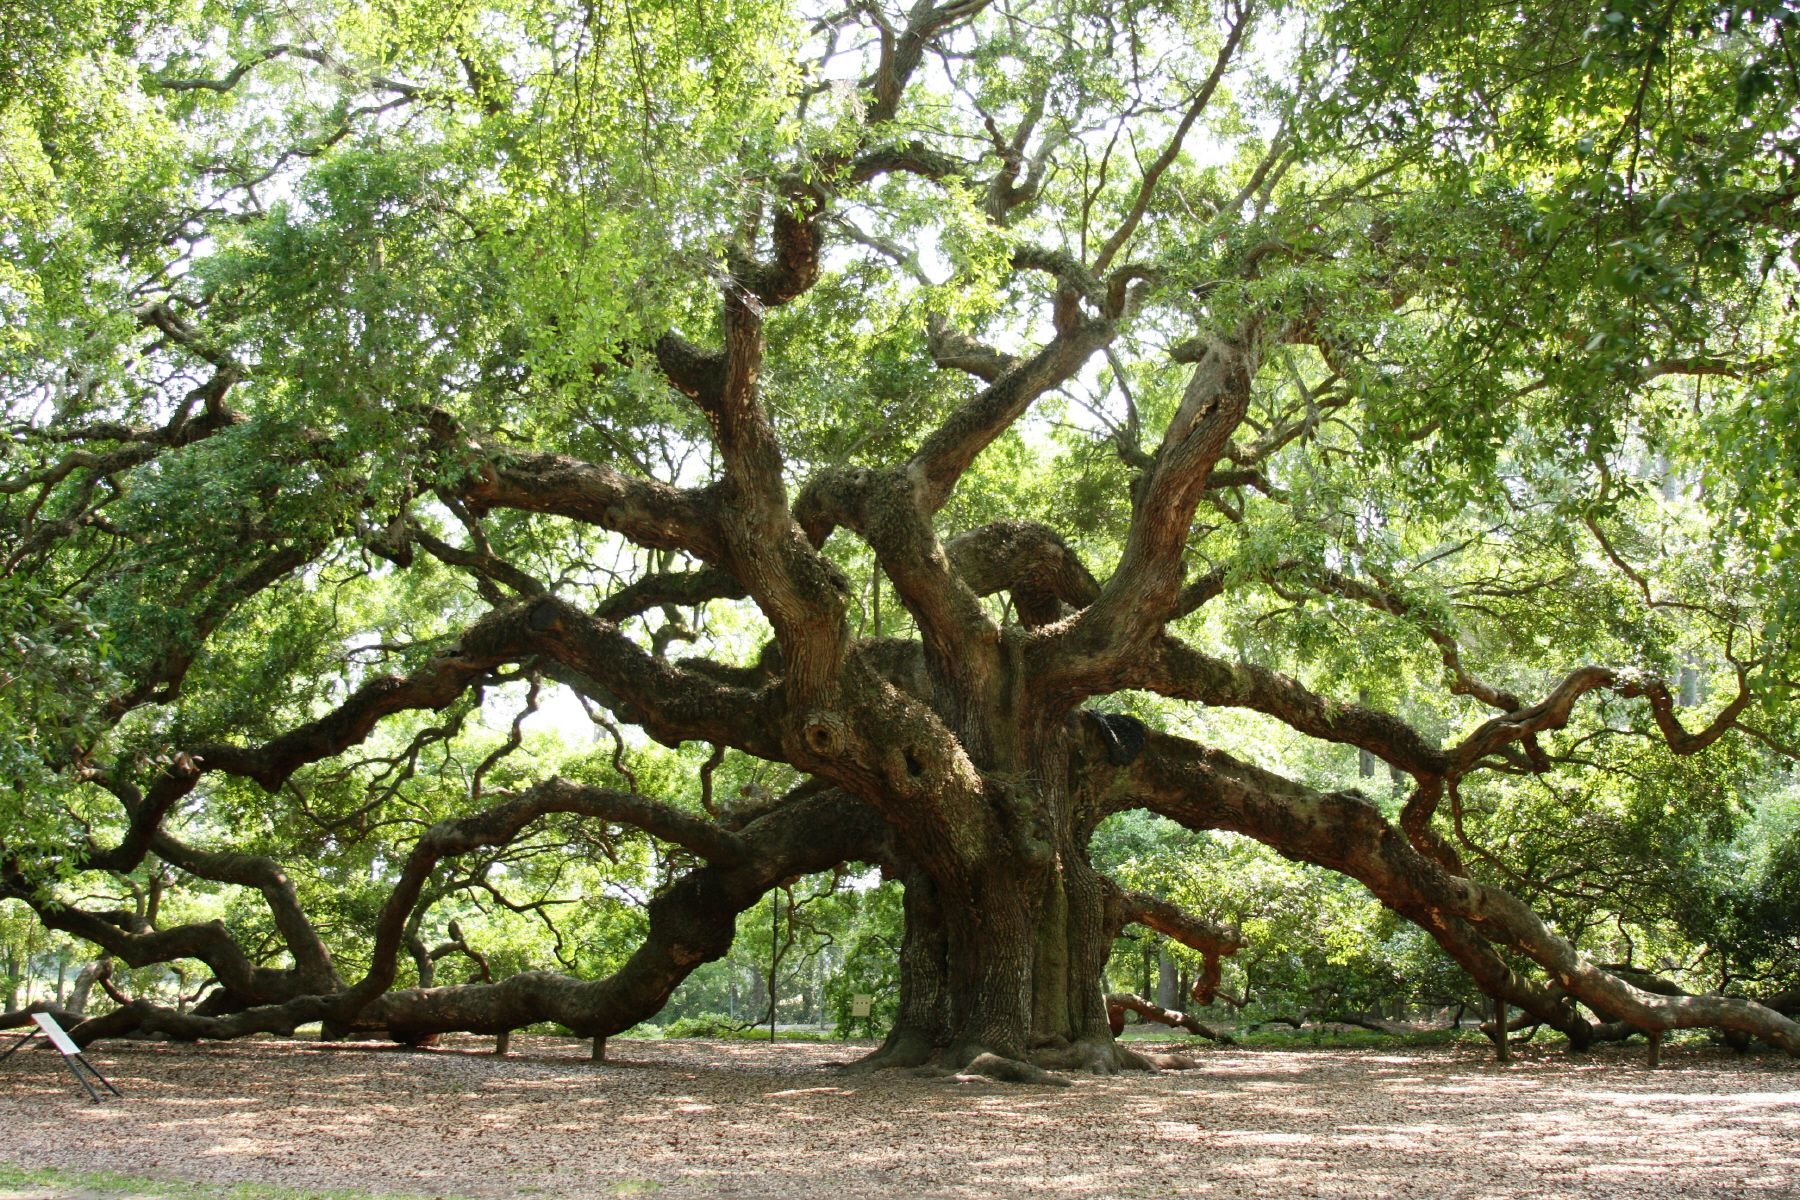 Красивое имена дерева. Дуб парк Фредвилл, Нонингтон, Великобритания. Иберийский дуб. Дуб ангела Чарльстон США. Темир Агач дерево.